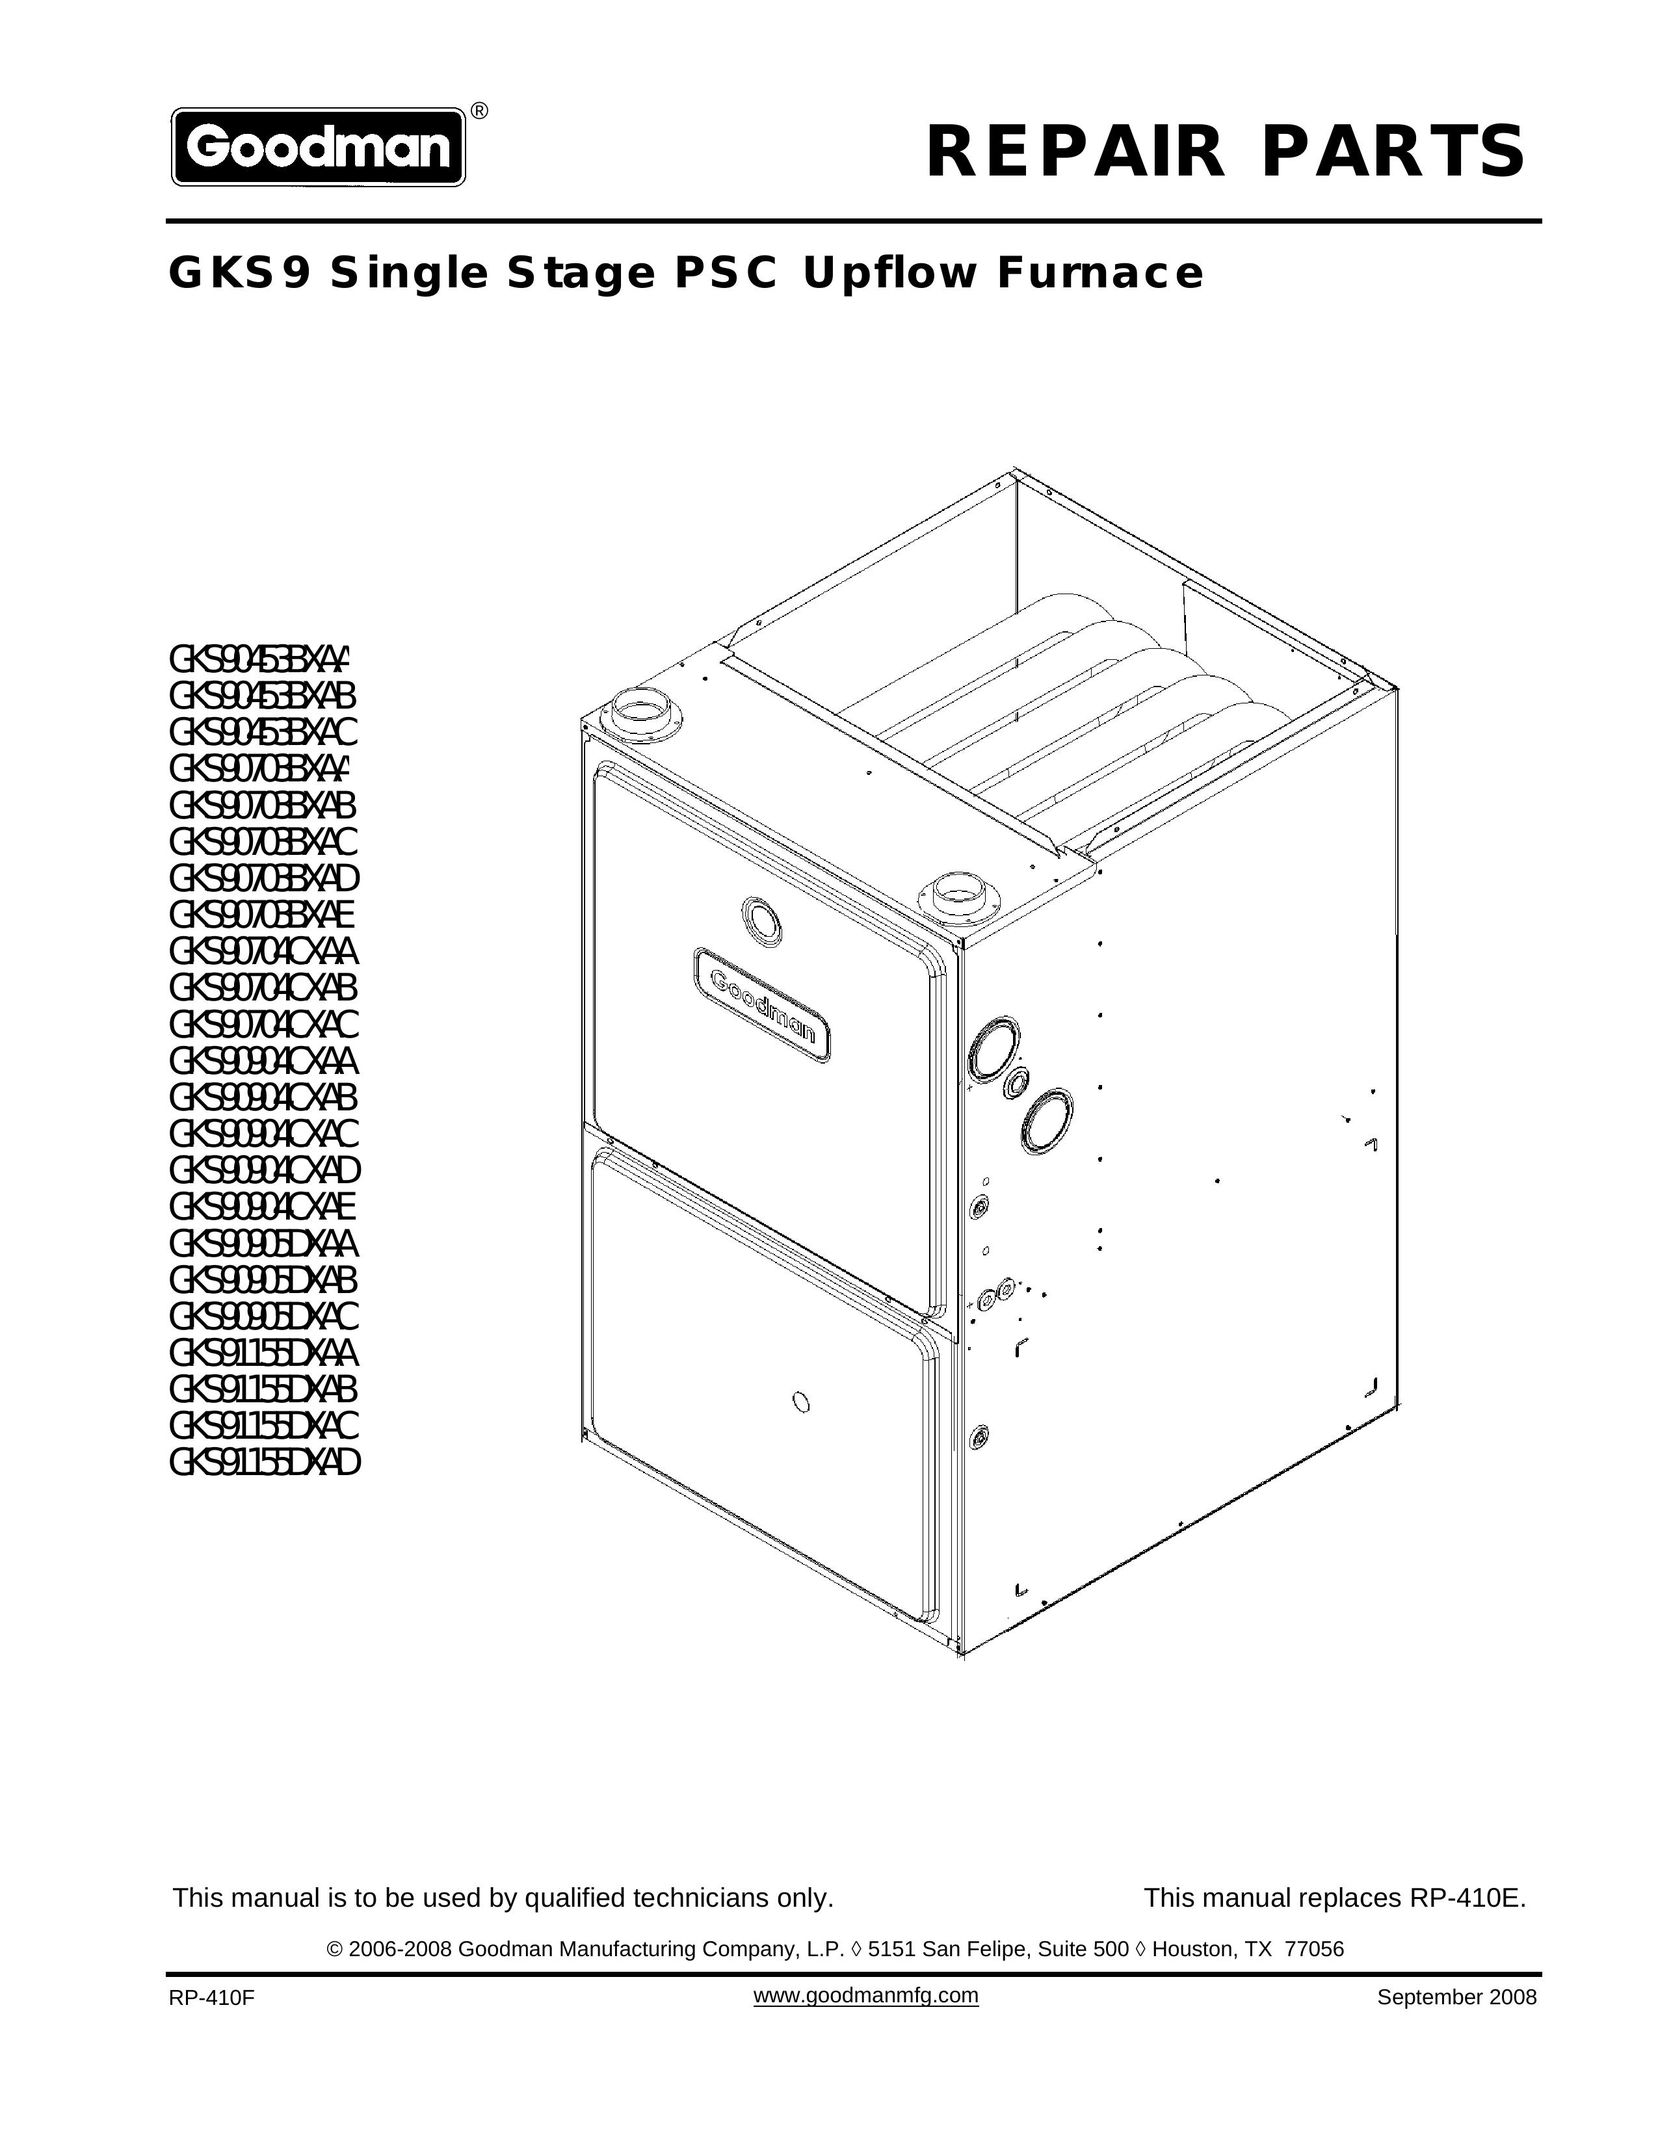 Goodman Mfg GKS90453BXAB Furnace User Manual